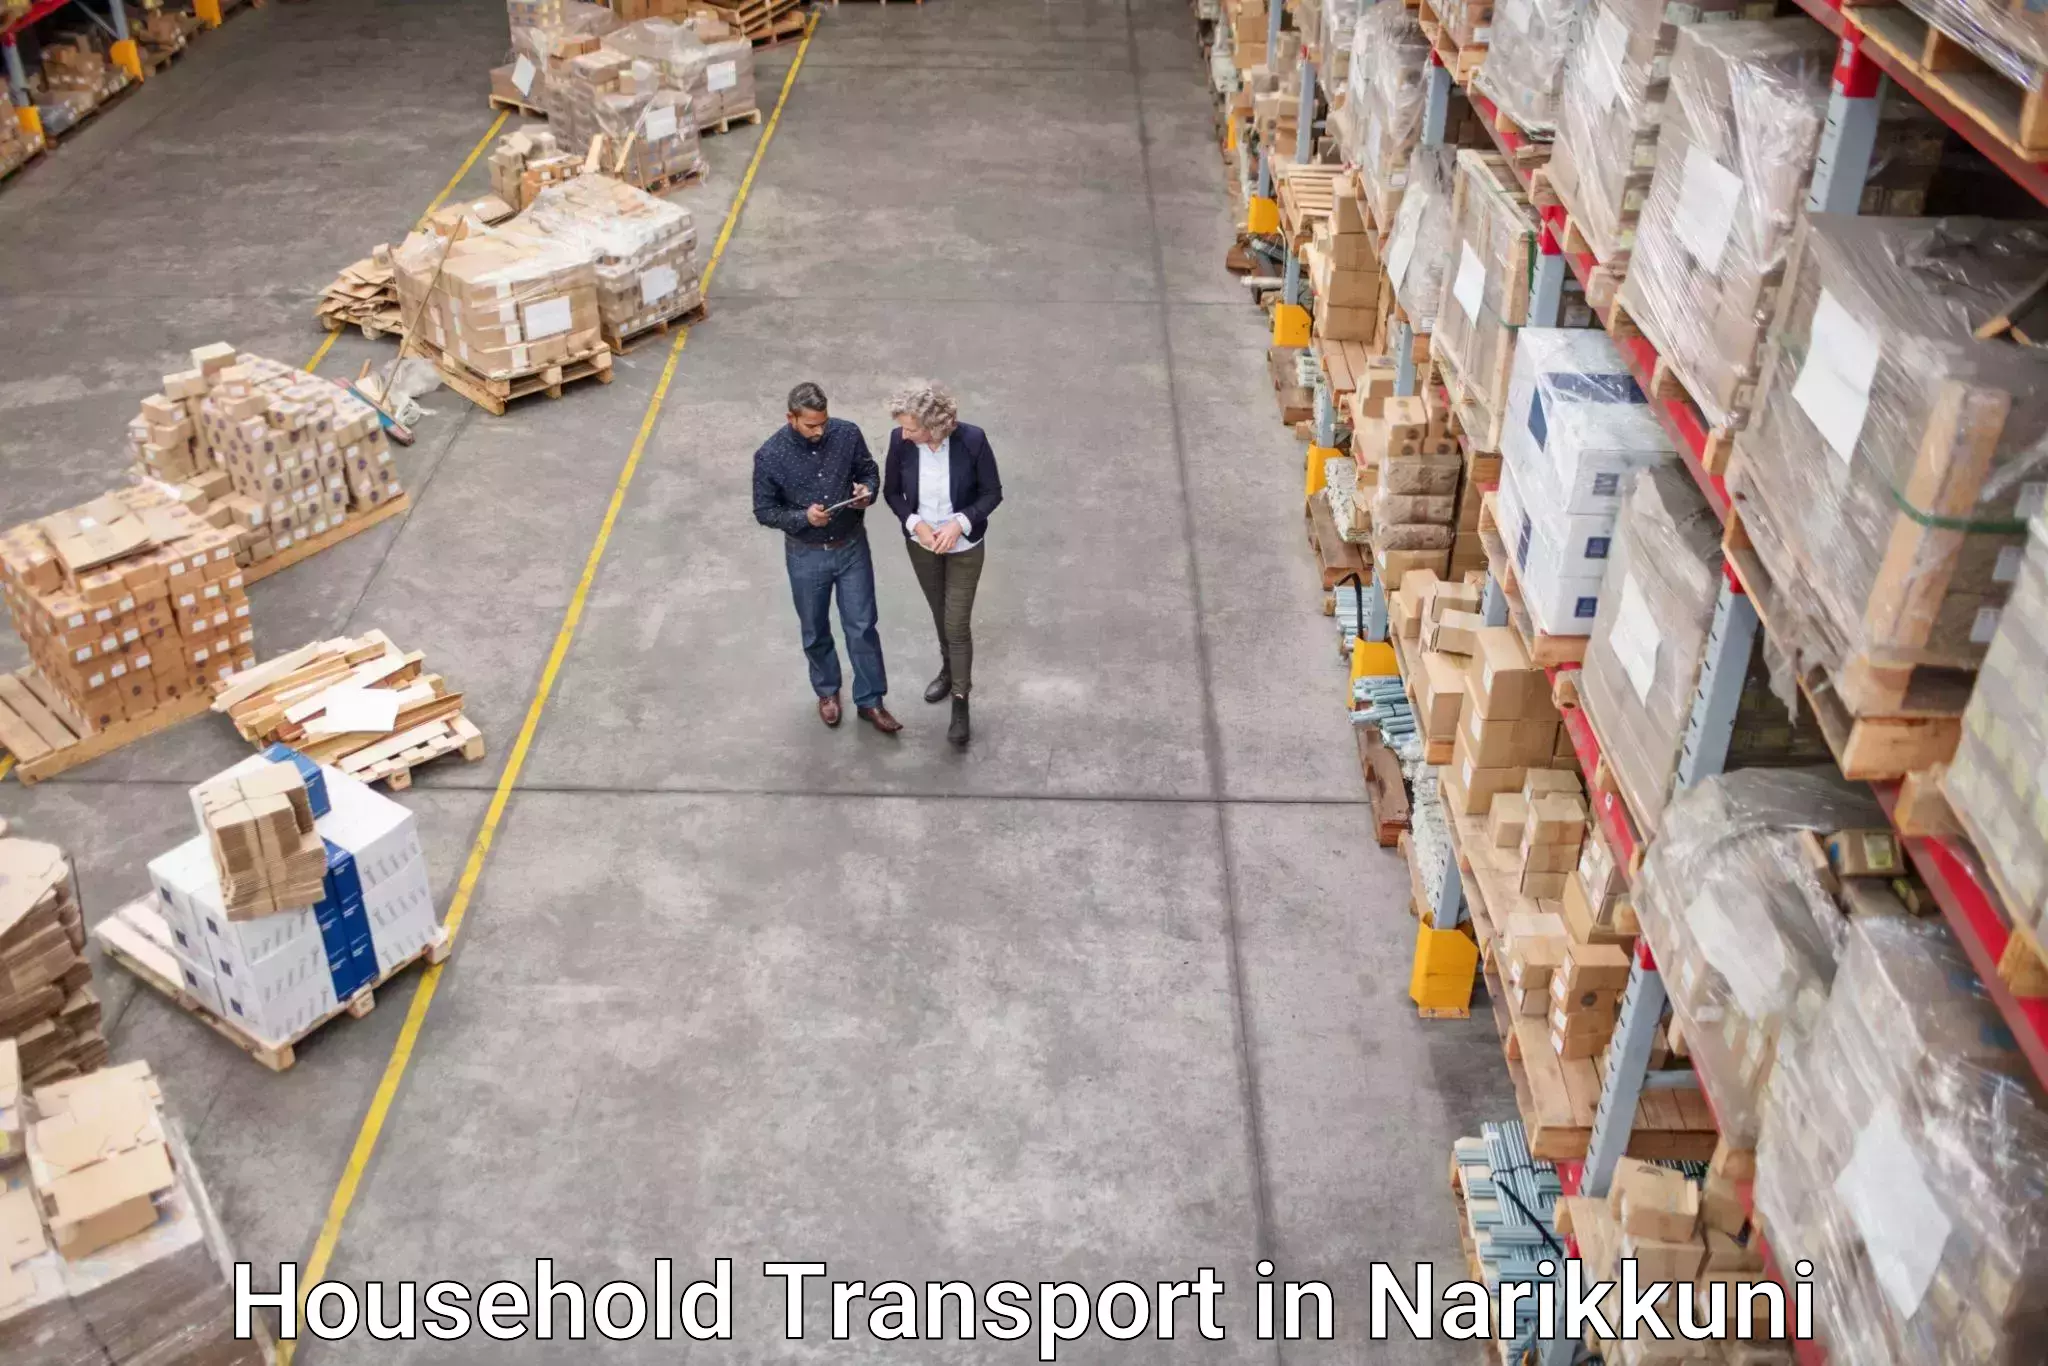 Furniture transport and storage in Narikkuni